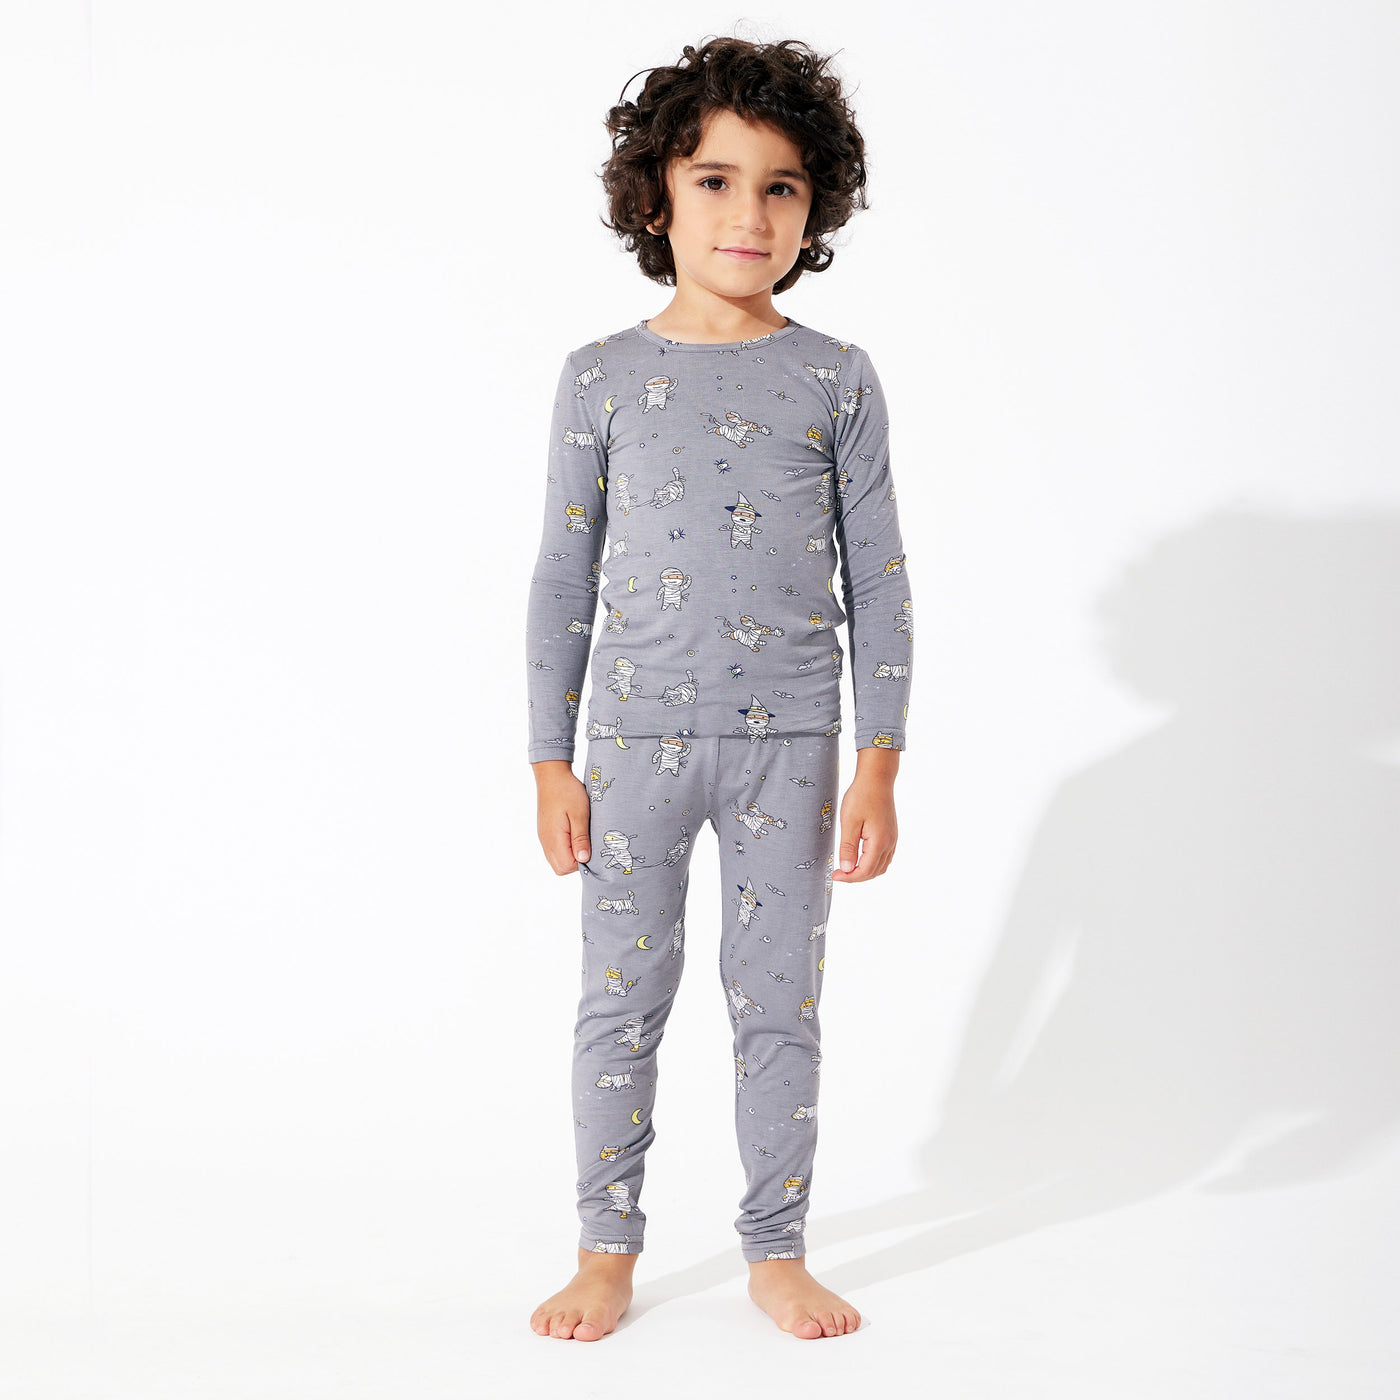 Bam-Boo-Tiful Halloween Bundle - Big Kid Pajamas